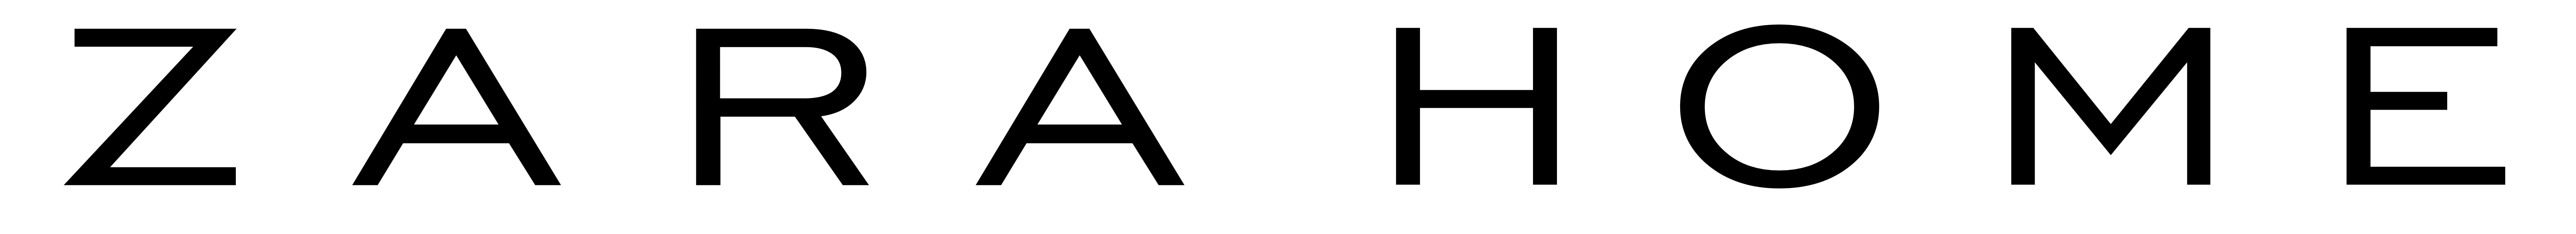 Zara Logo Transparent Image